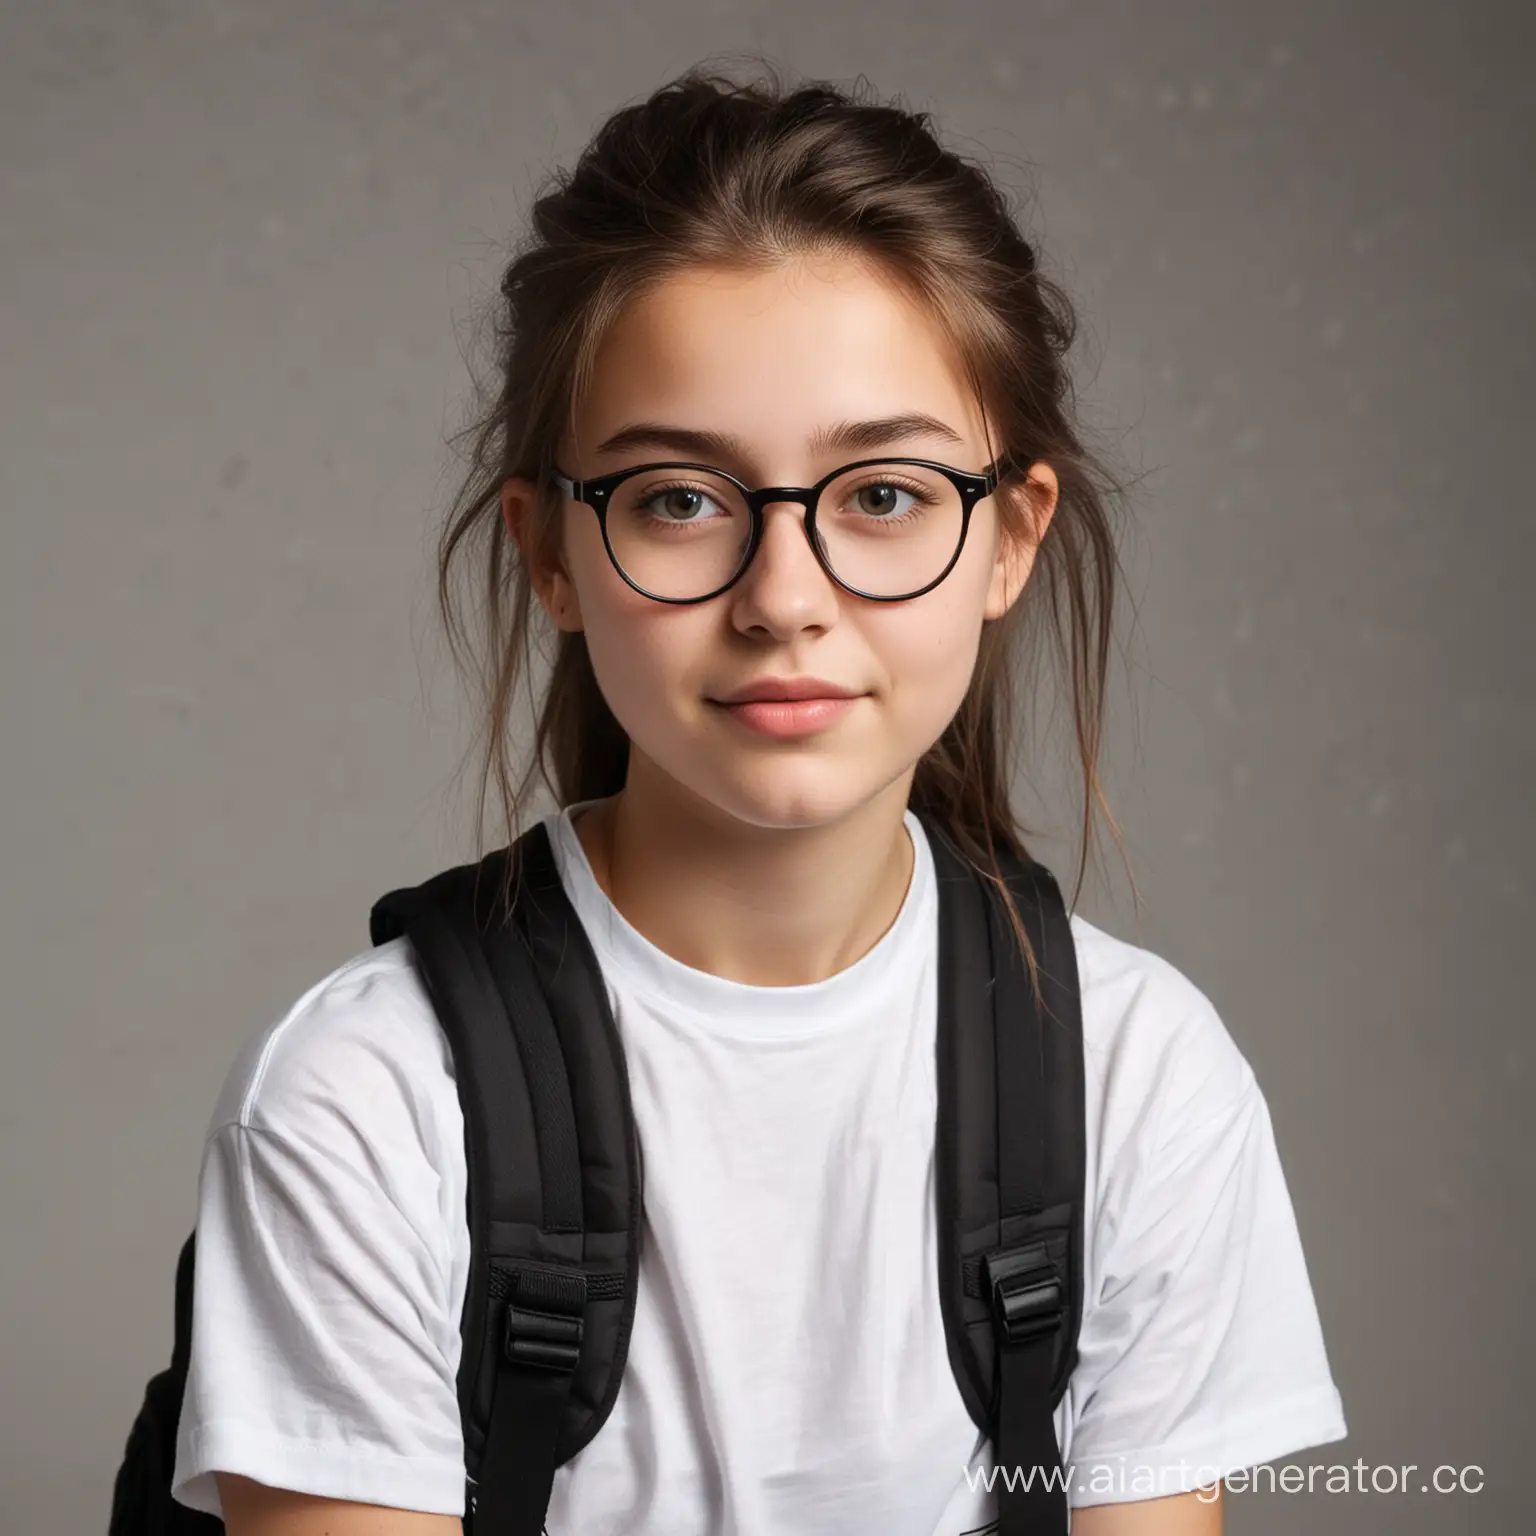 девочка лера ей 15 лет она носит очки и рюкзак и белую футболку

